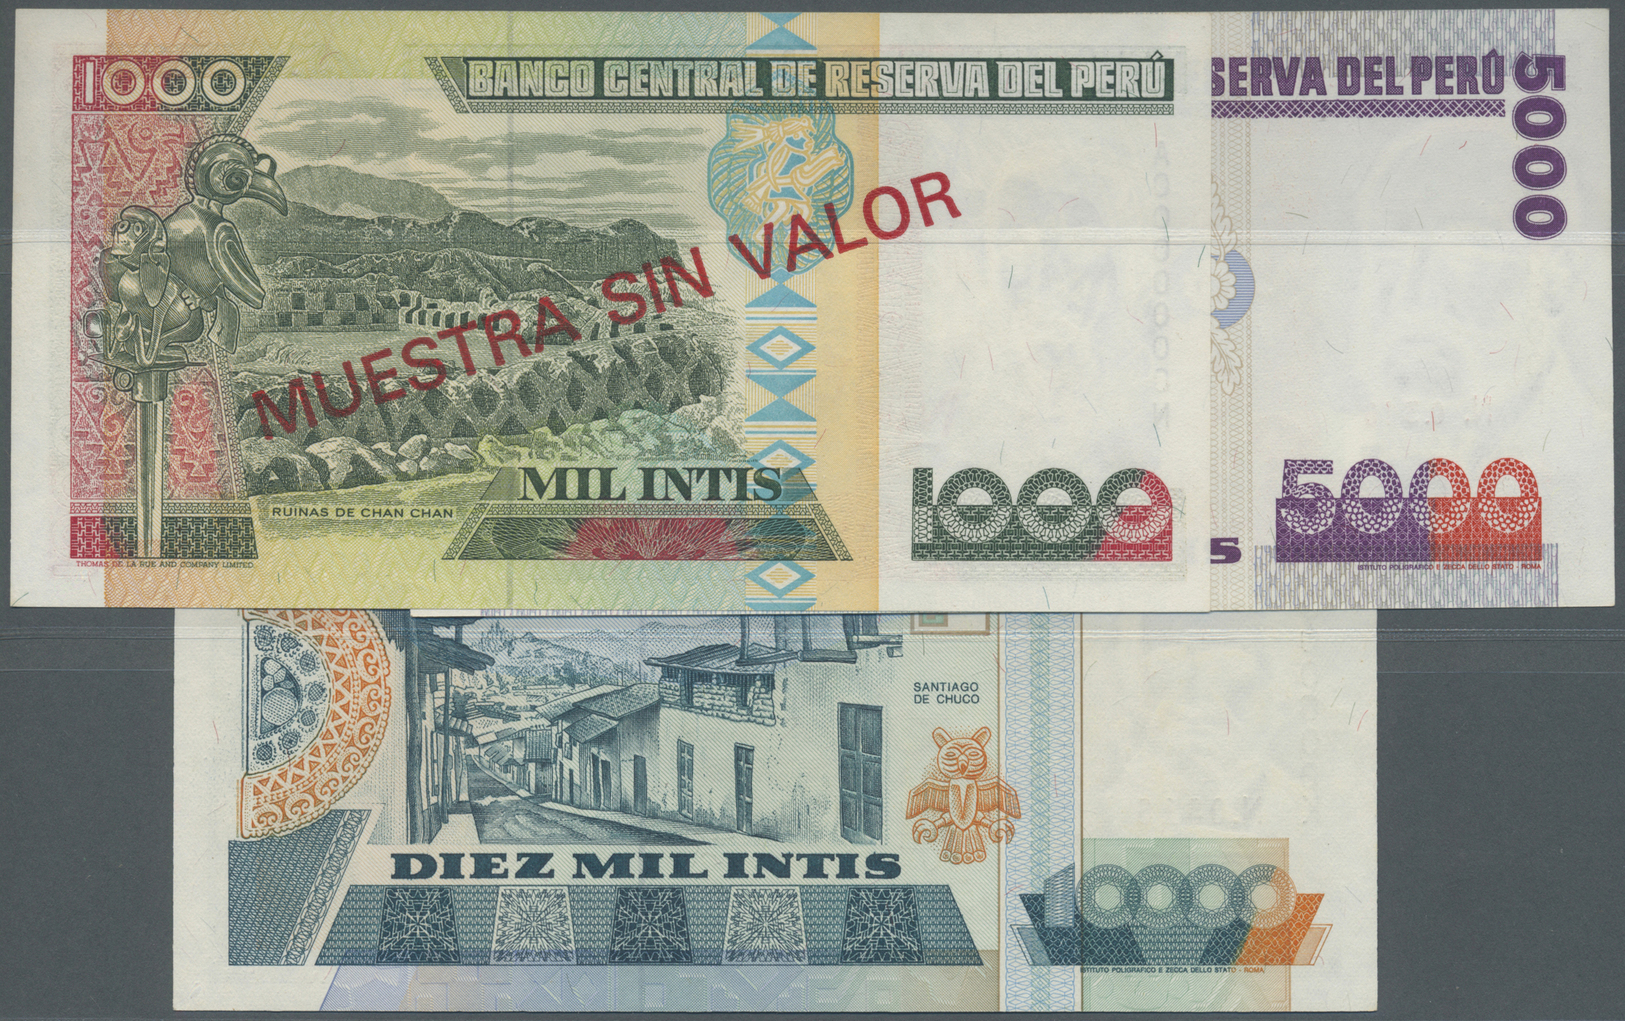 01968 Peru: Set Of 3 Specimen Notes Containing 5000 Intis 1988, 10.000 Intis 1988 And 1000 Intis 1988, All In Condition: - Peru